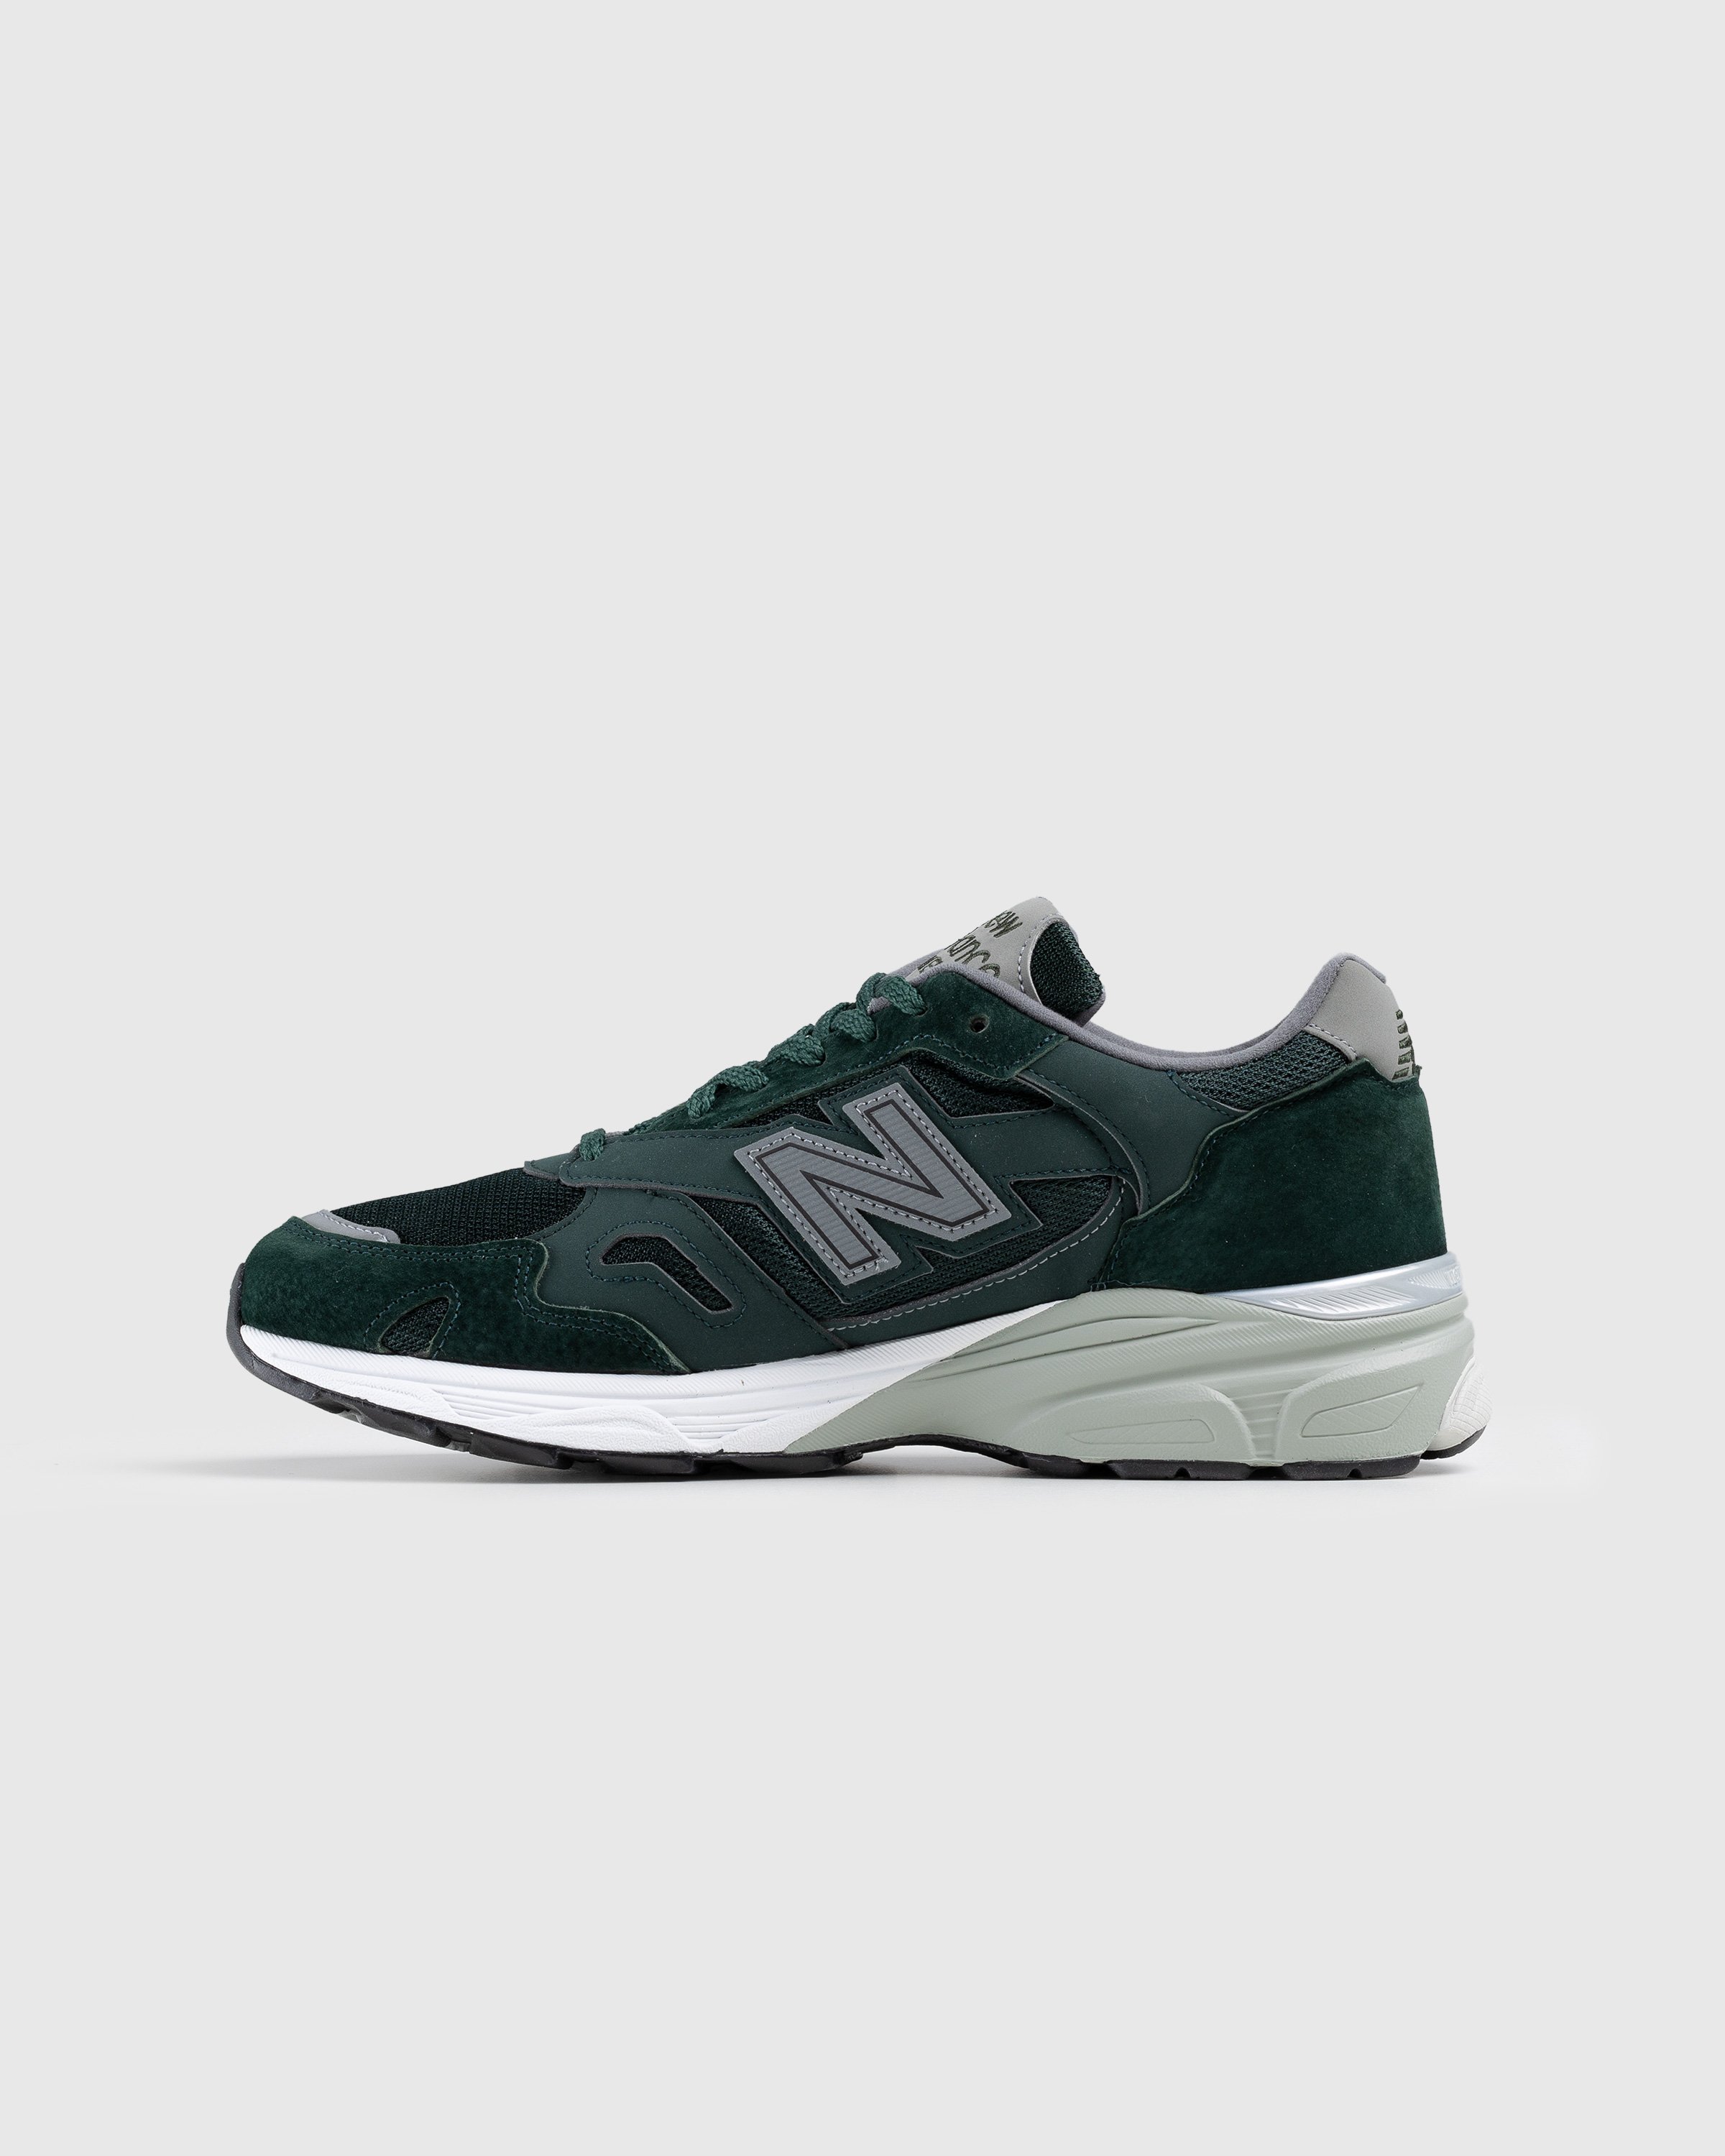 New Balance - M920GRN Green/Grey - Footwear - Green - Image 3